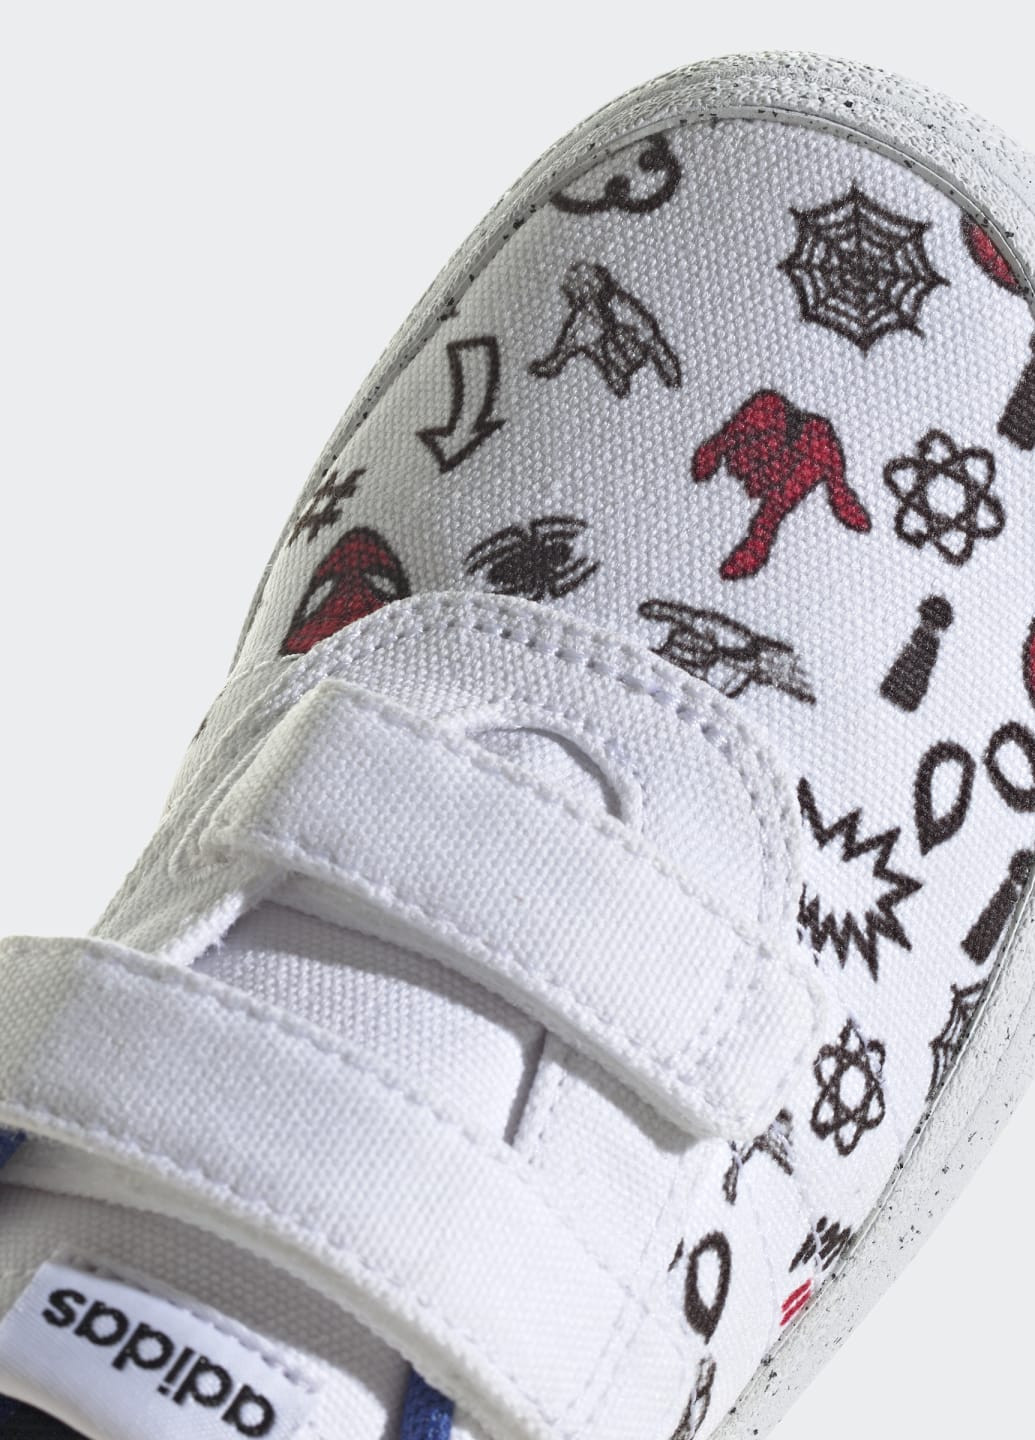 Білі всесезонні кросівки x marvel vulcraid3r spider-man adidas